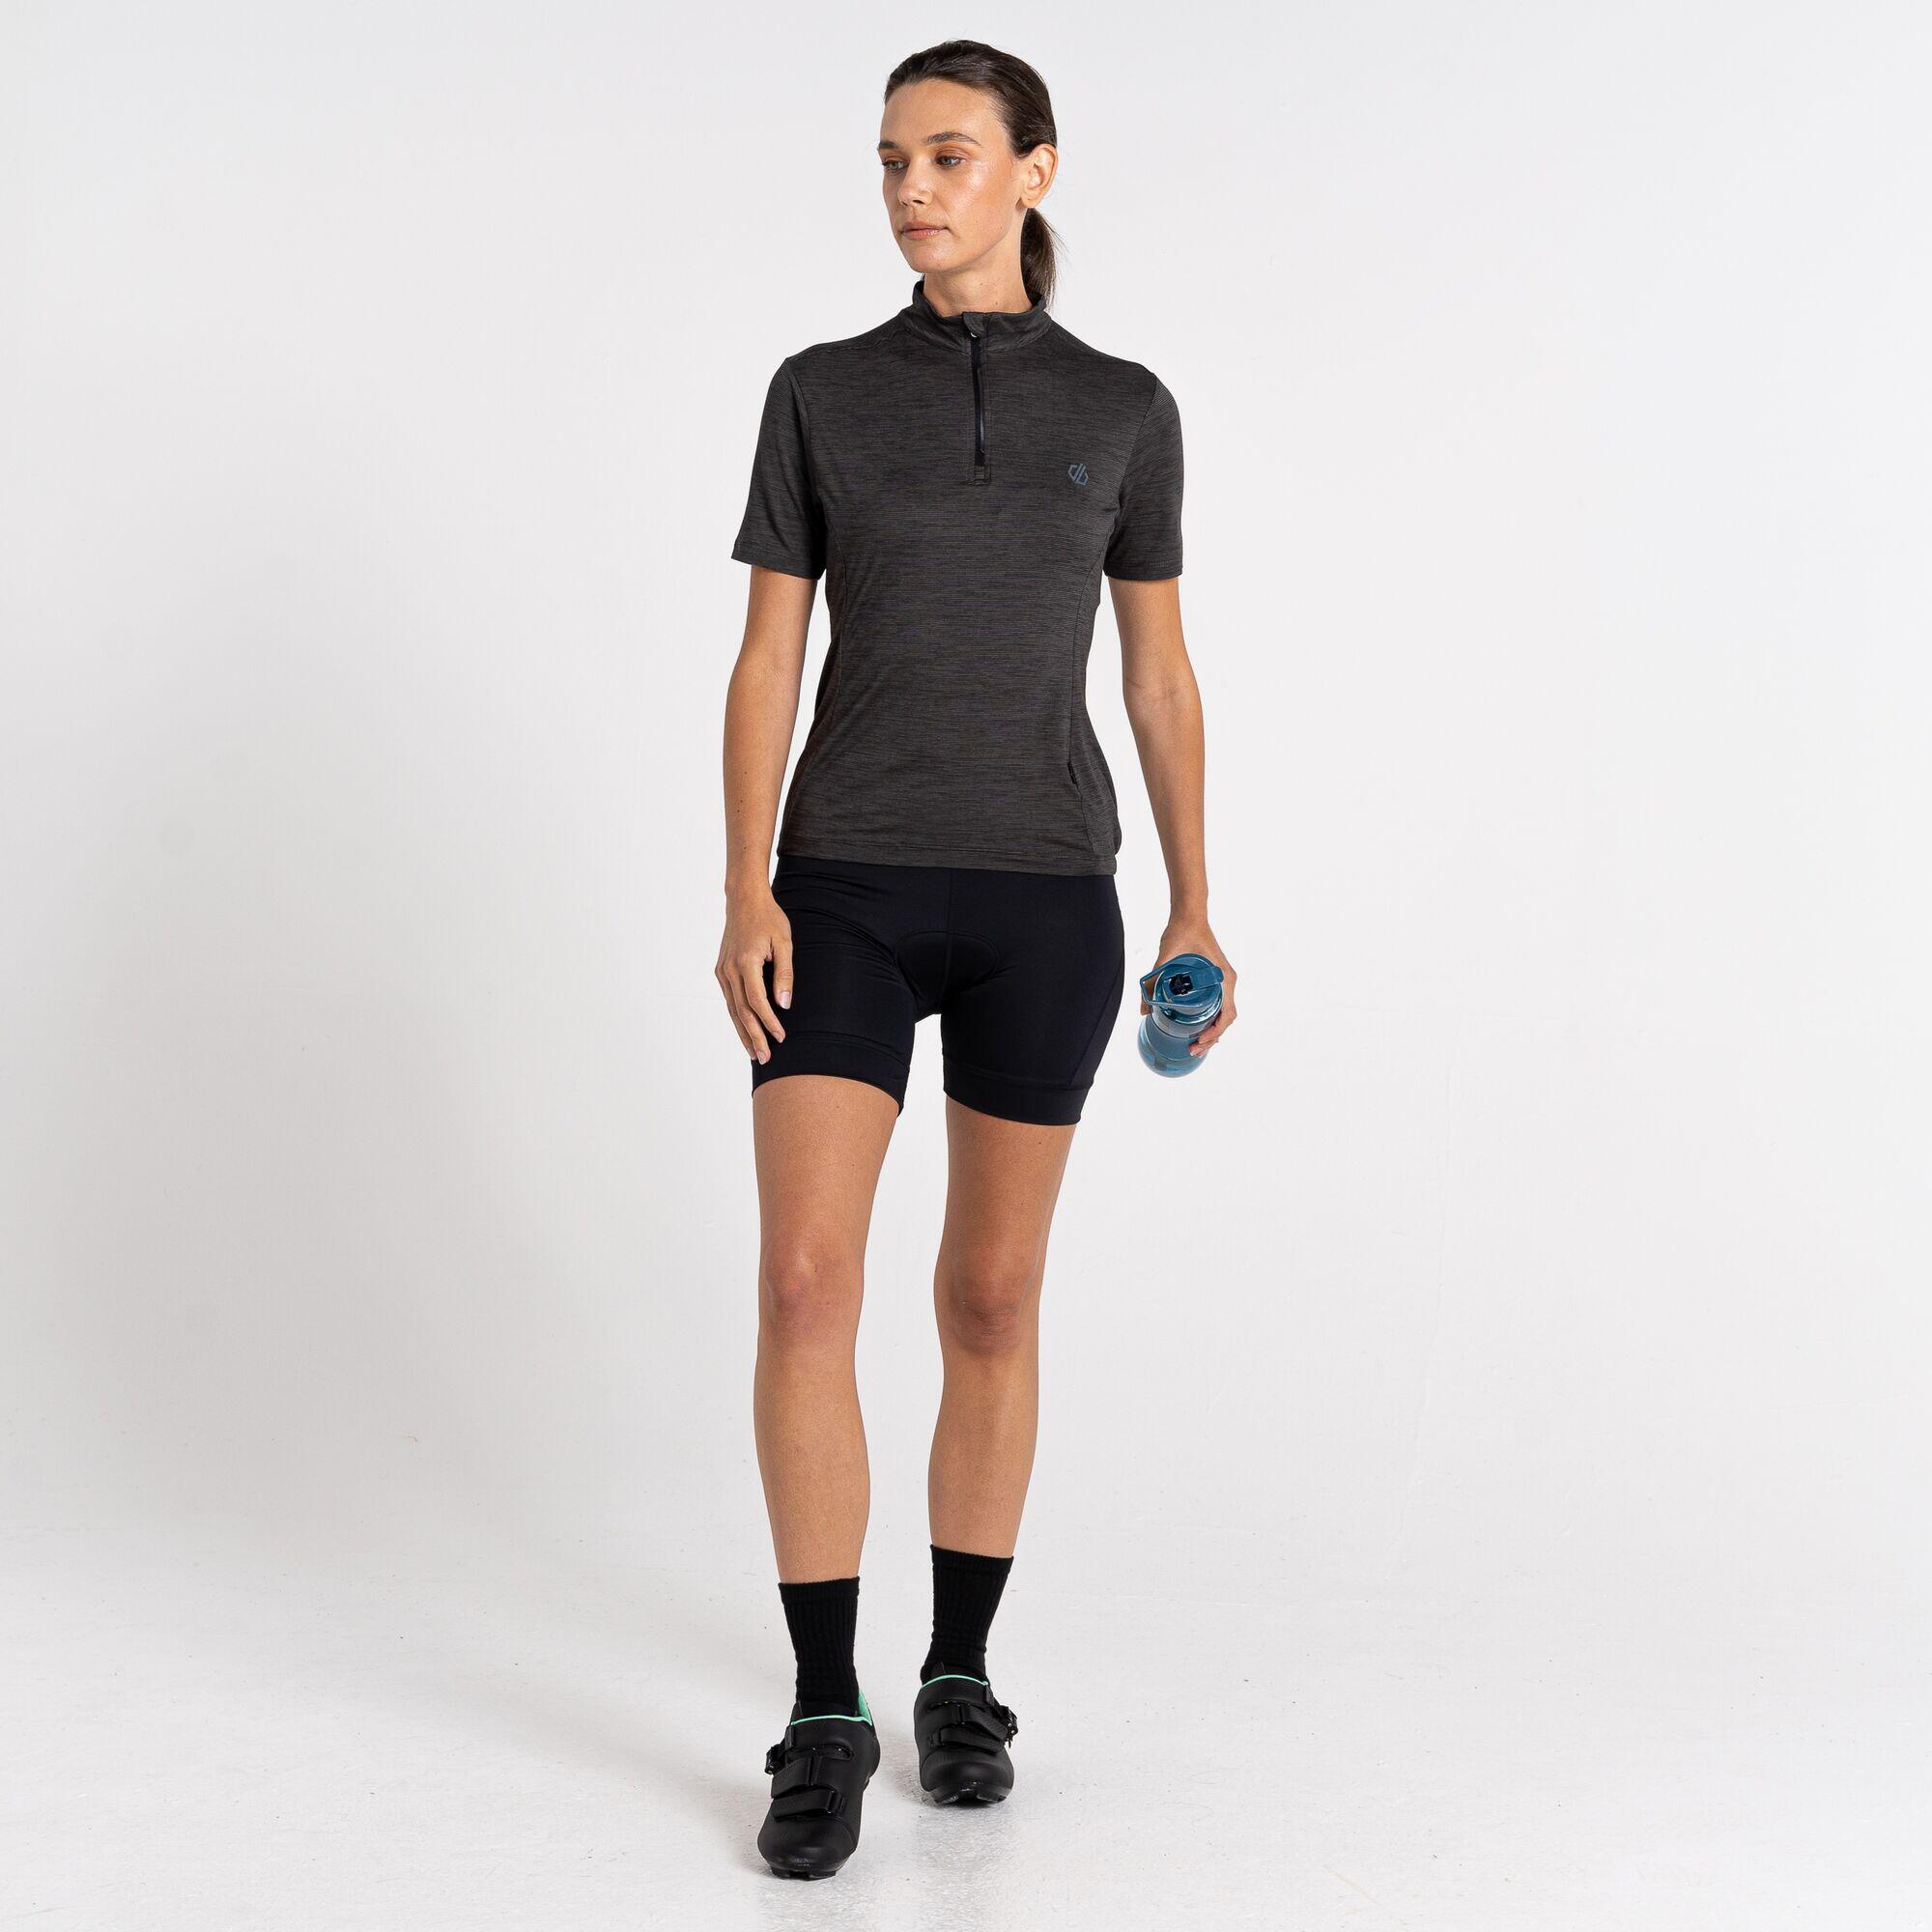 Pedal Through It Women's Fitness Short Sleeve 1/2 Zip Jersey - Black Marl 5/7